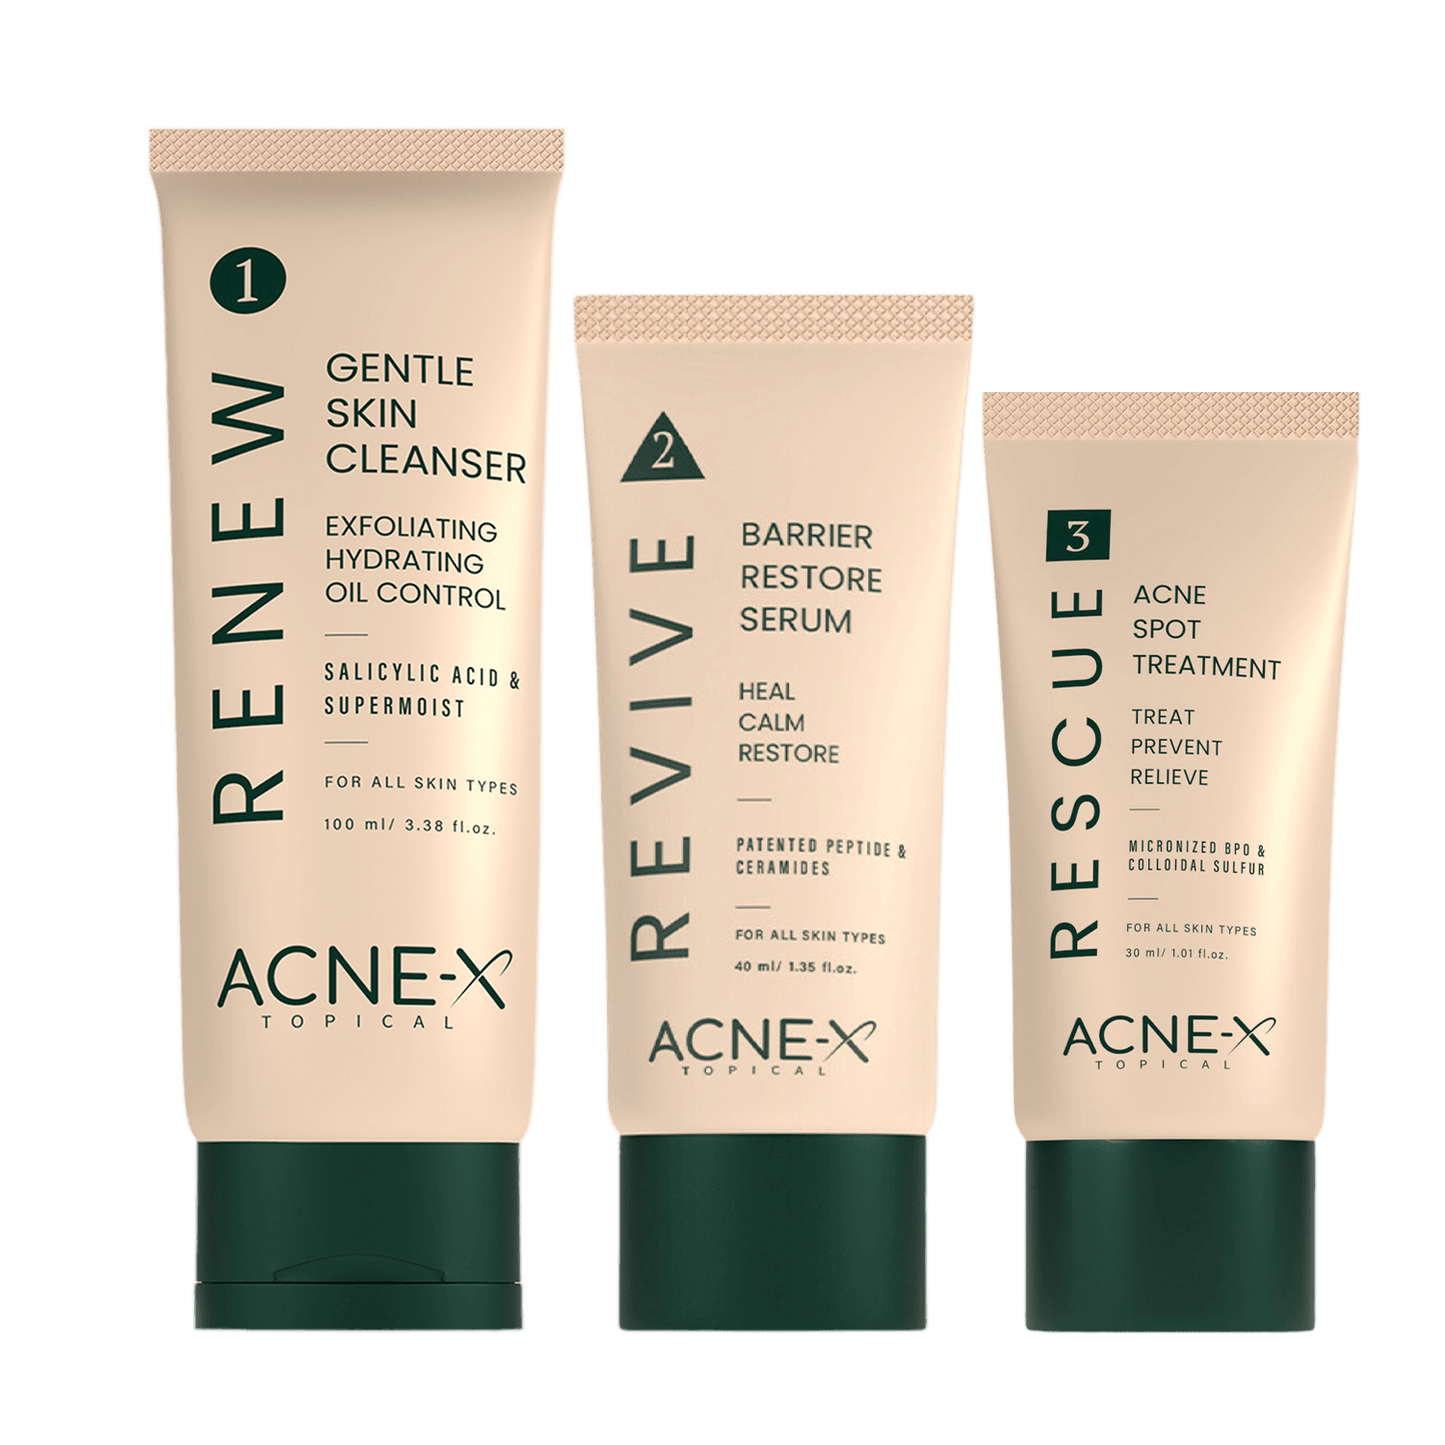 X-KIT: The Anti Acne Kit - Acne-X Topical